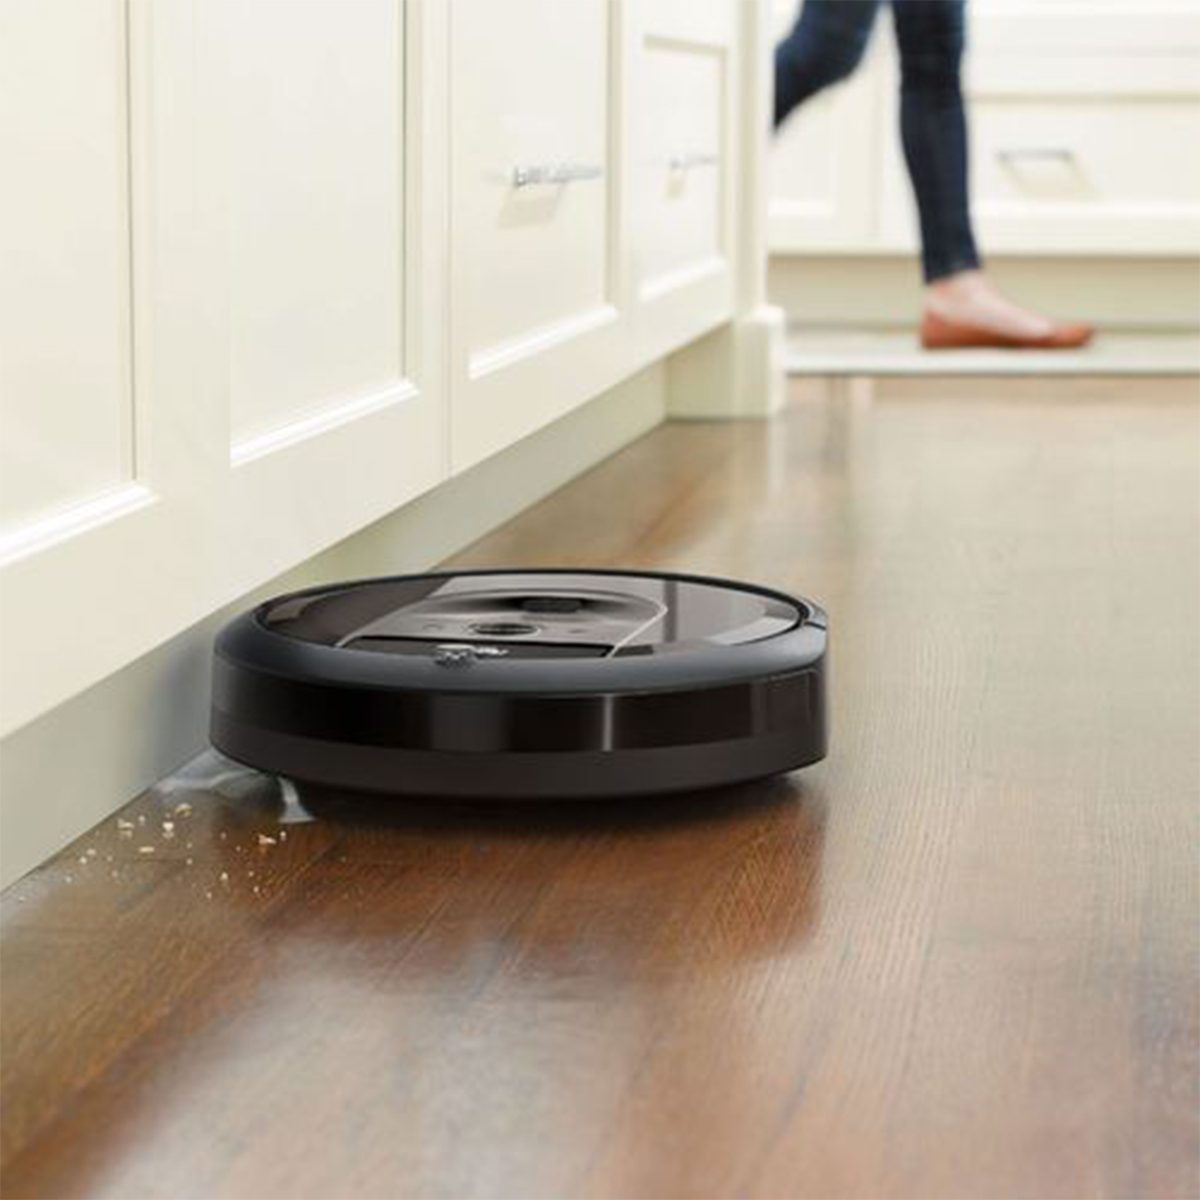 Irobot Roomba Vacuum Via Bestbuy2